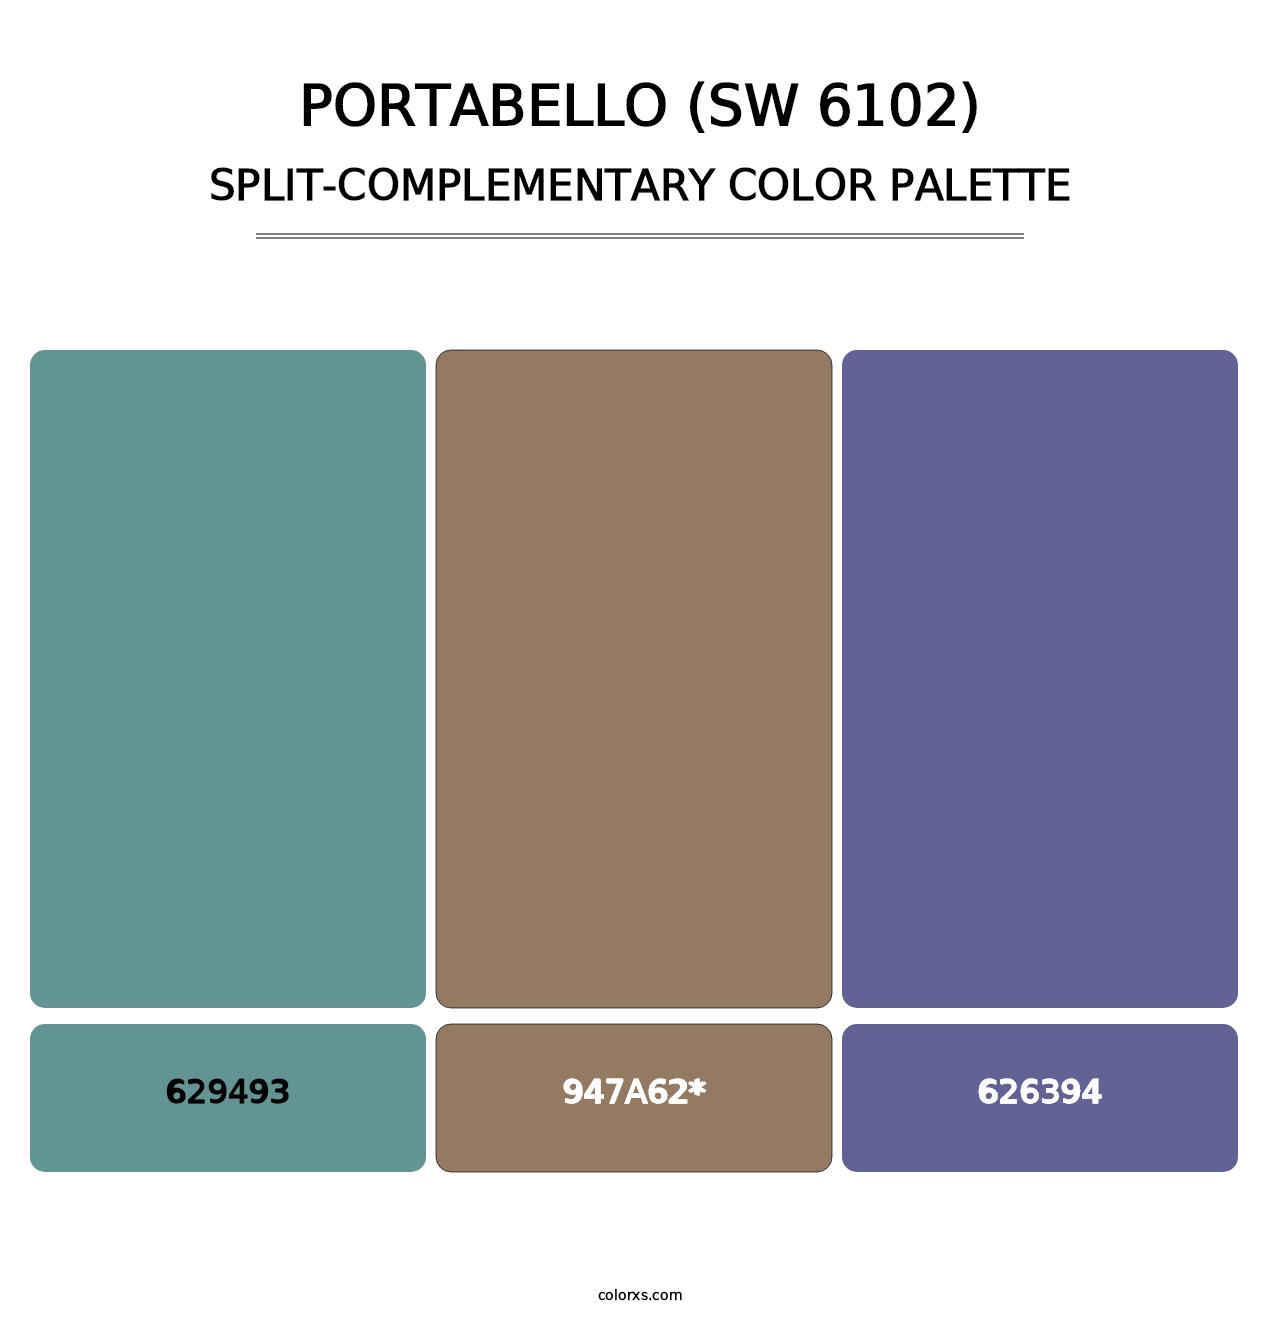 Portabello (SW 6102) - Split-Complementary Color Palette